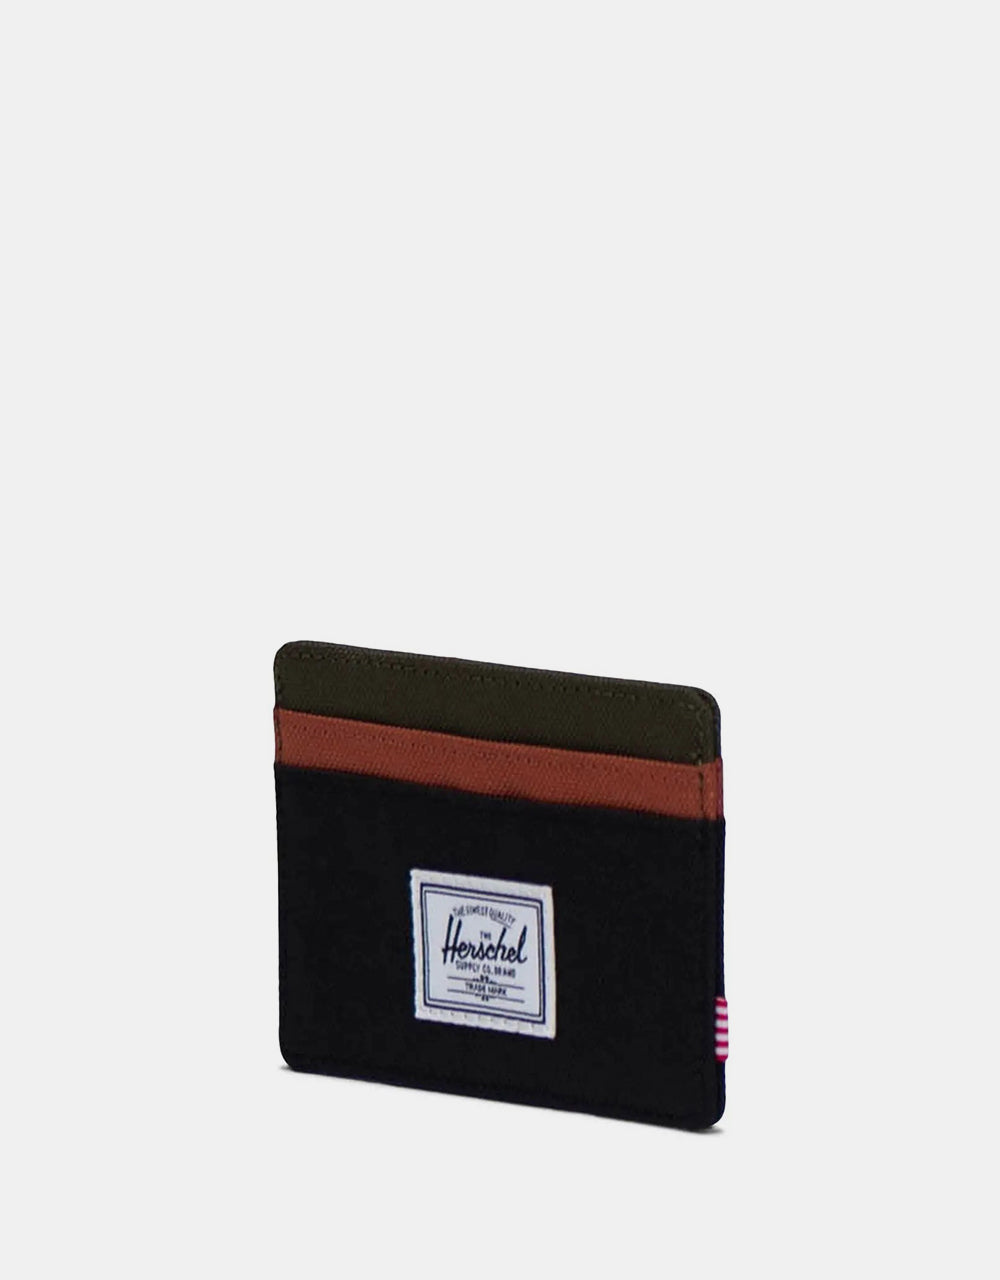 Herschel Supply Co. Charlie RFID Cardholder - Black/Ivy Green/Chutney